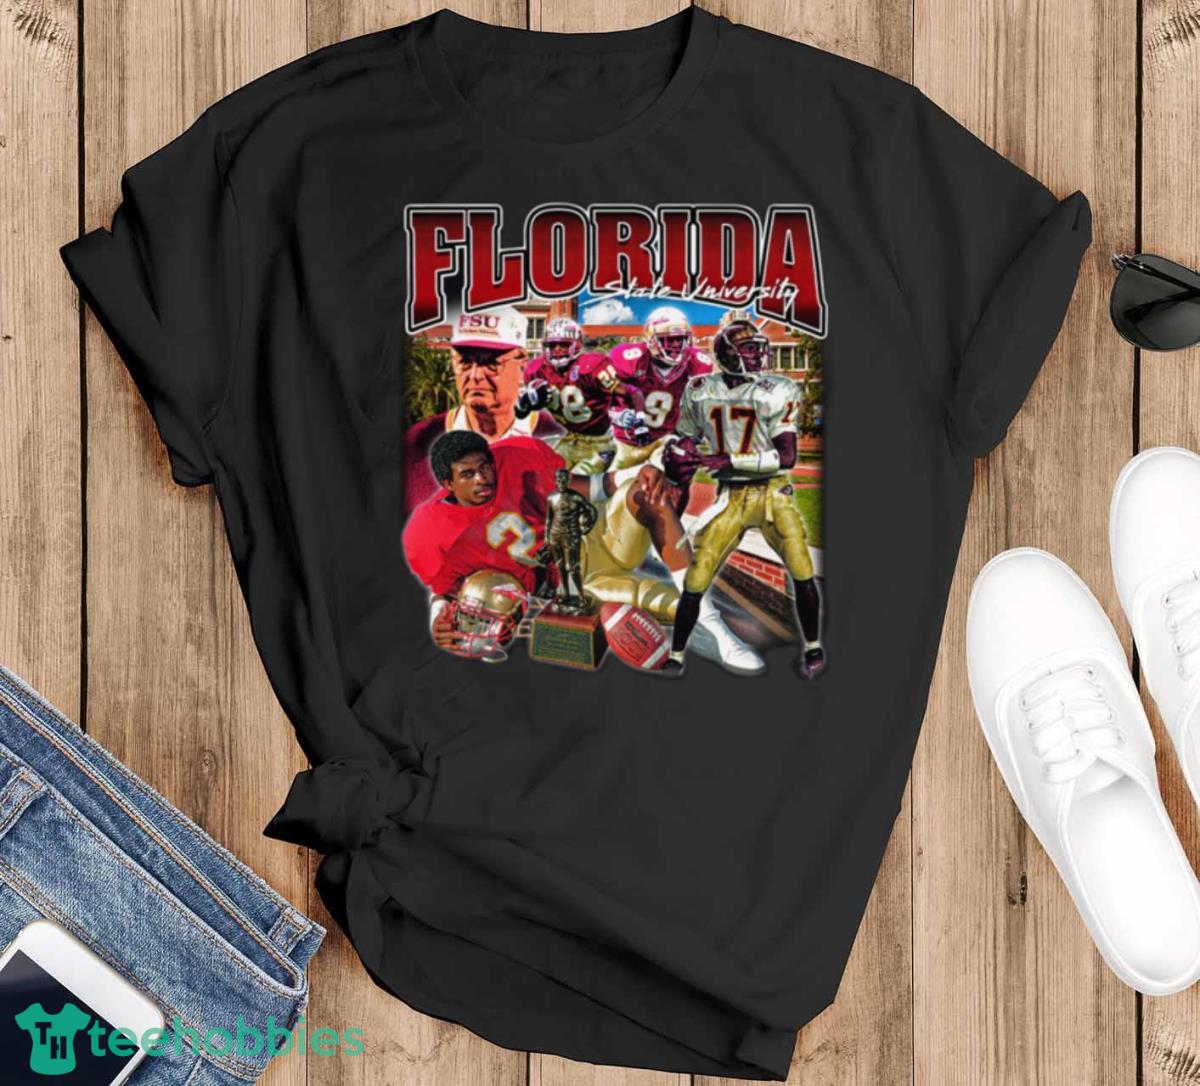 90’s Inspired Florida State V2 Shirt - Black T-Shirt